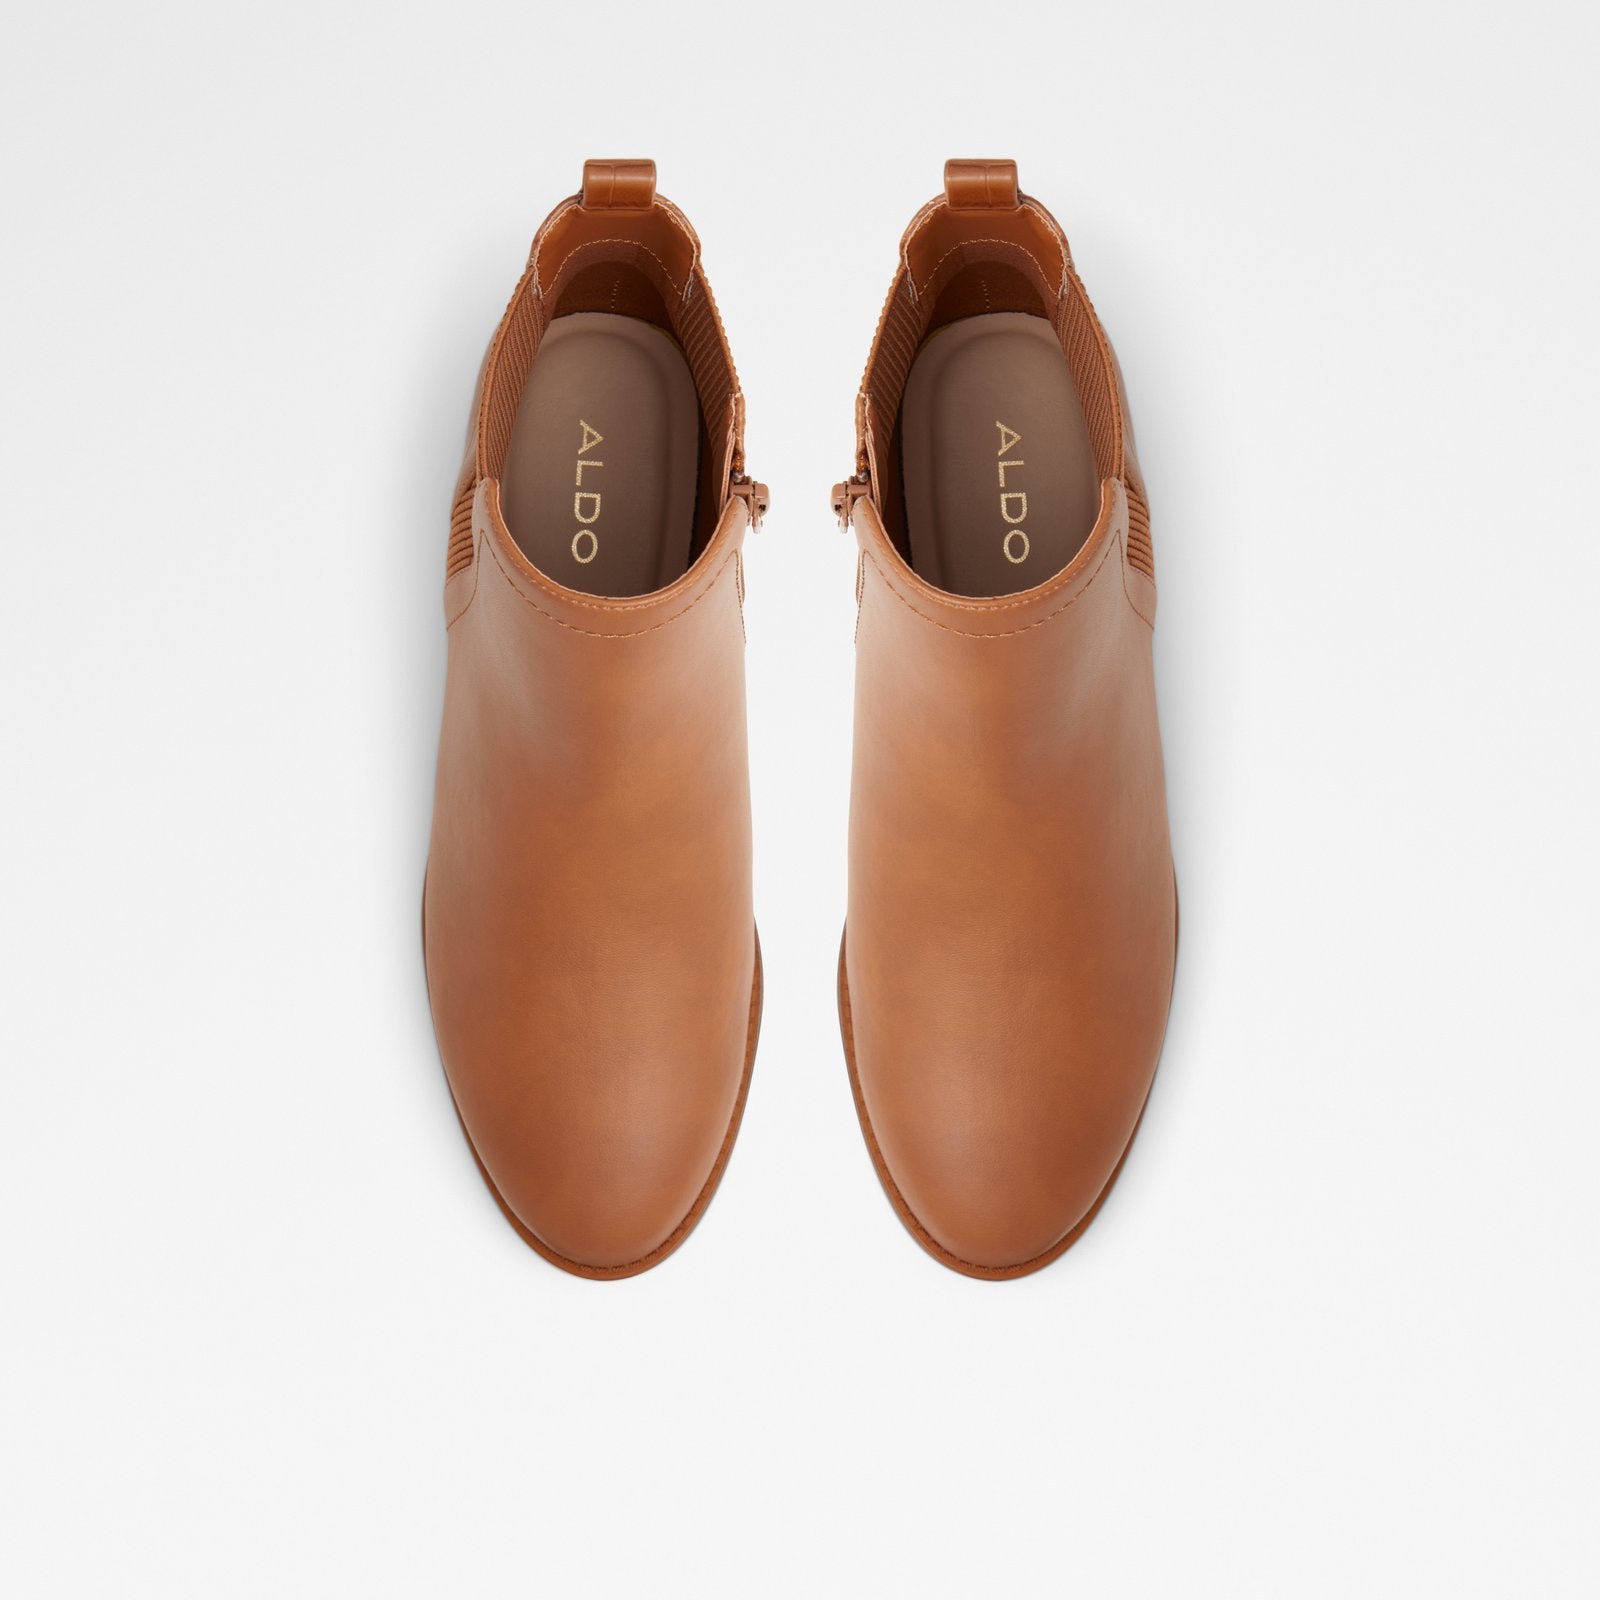 Ranaver Women Shoes - Medium Brown - ALDO KSA